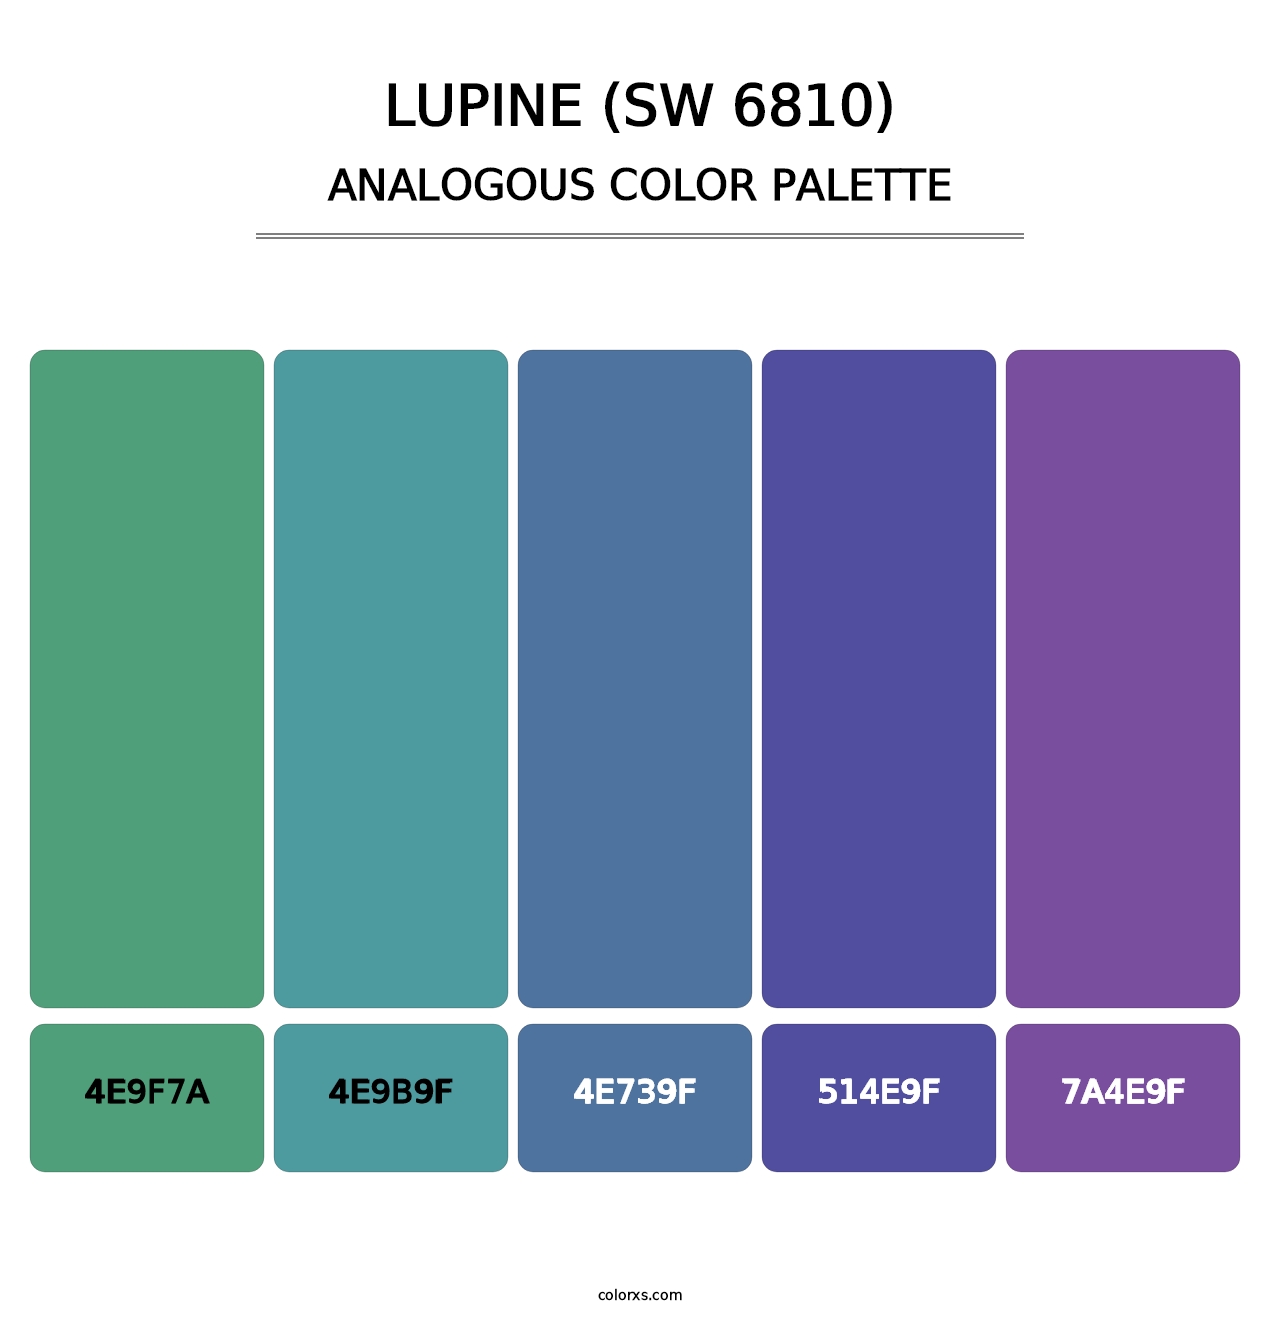 Lupine (SW 6810) - Analogous Color Palette